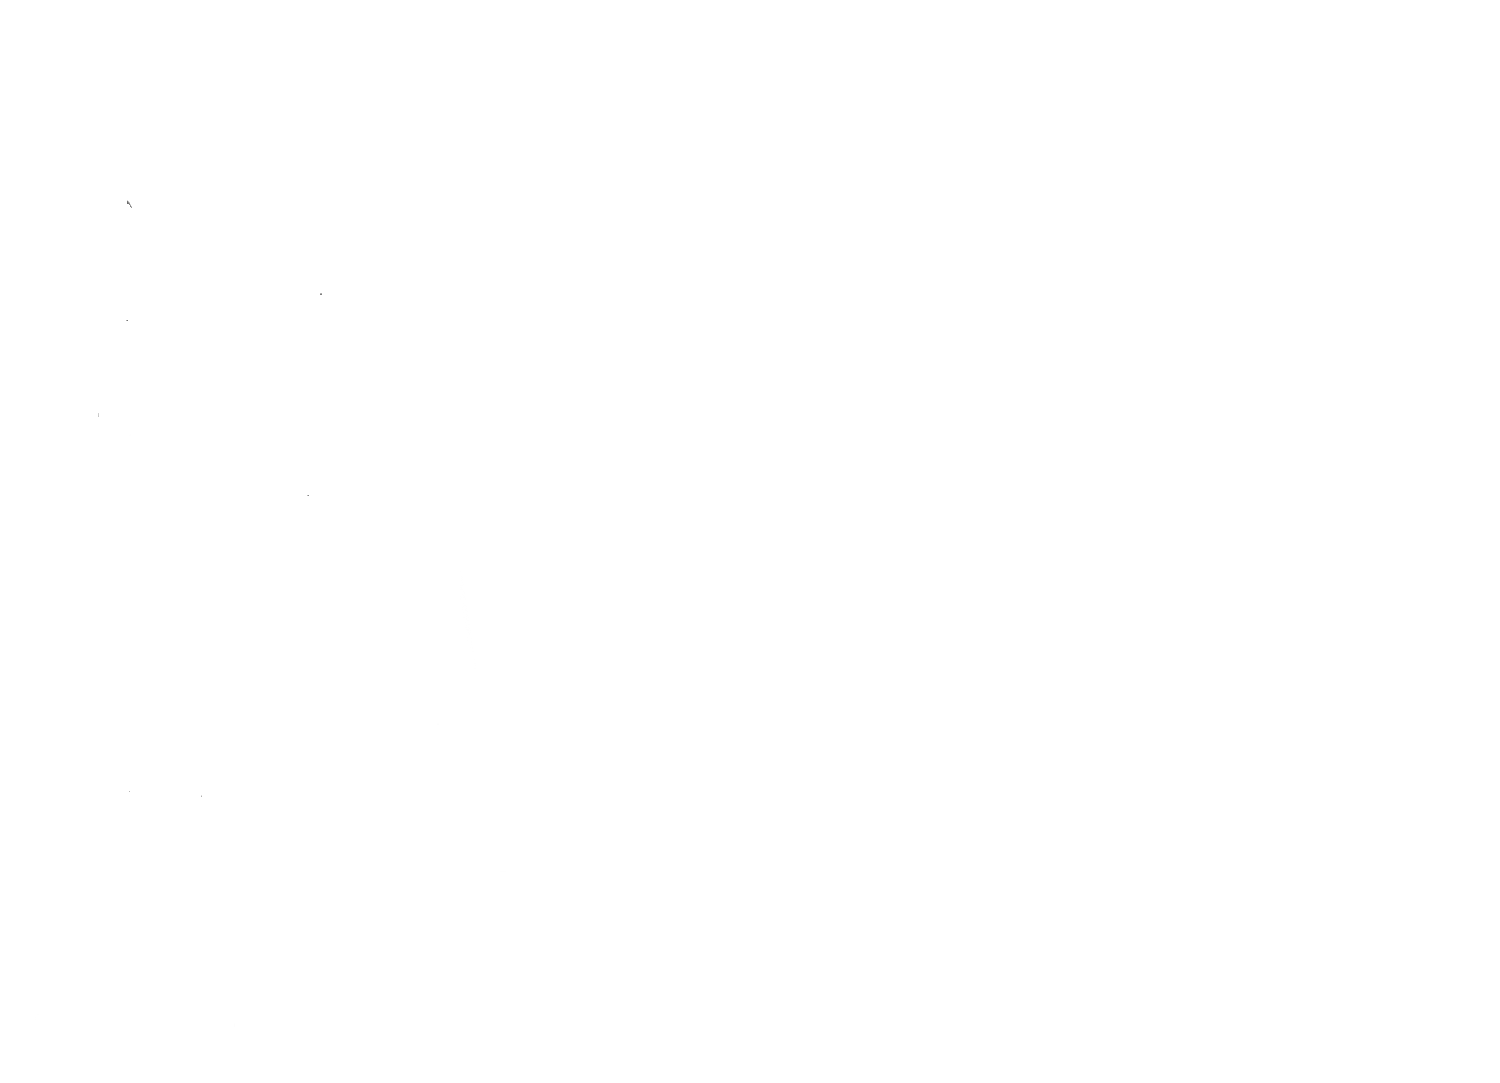 Jerry DeVore Bassist